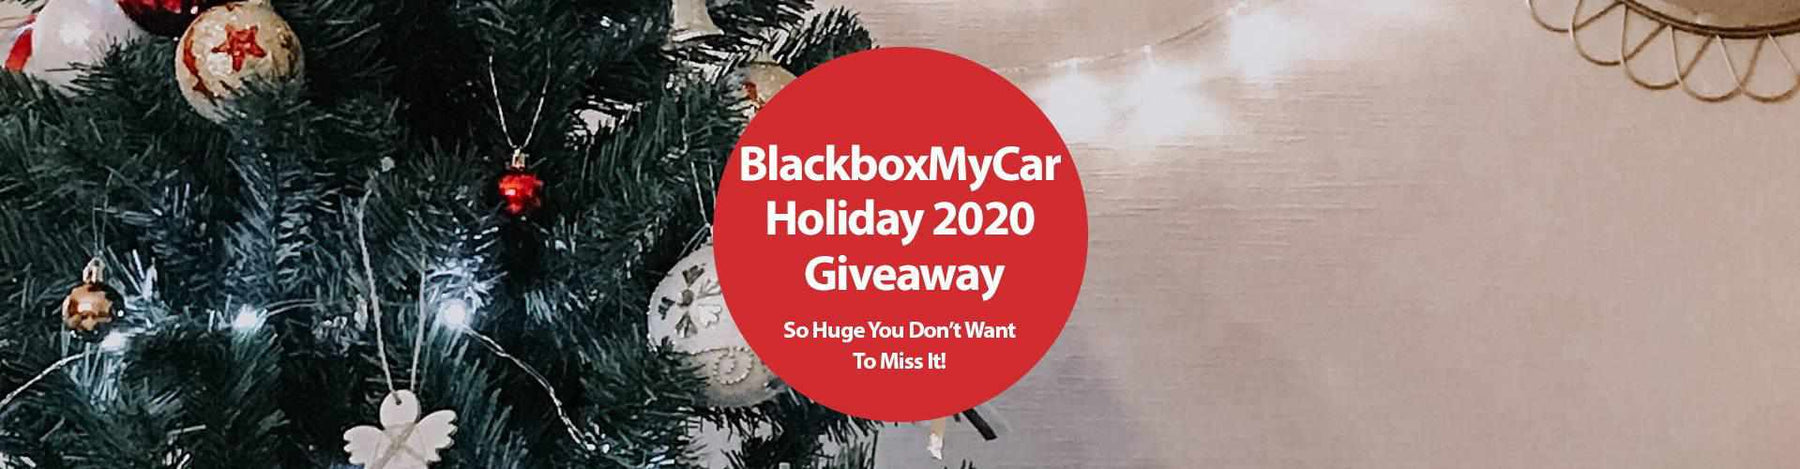 BlackboxMyCar Holiday 2020 Giveaway - - BlackboxMyCar